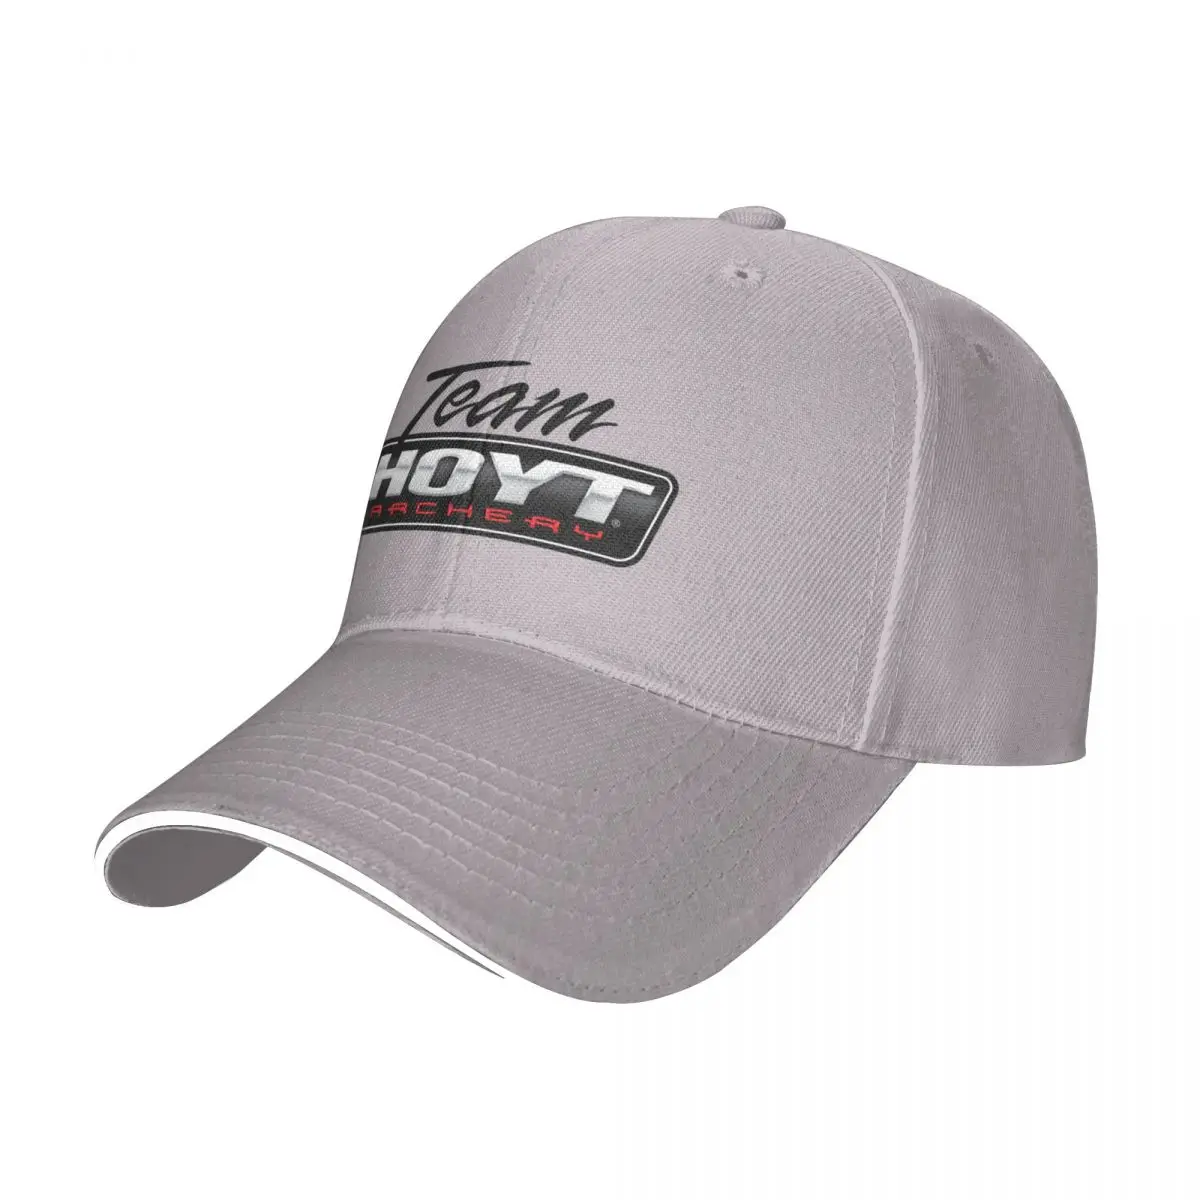 

TOOL Band Team Hoyt Archery Symbol Cap Baseball Cap Golf Cap Sun Cap Hat For Girls Men's